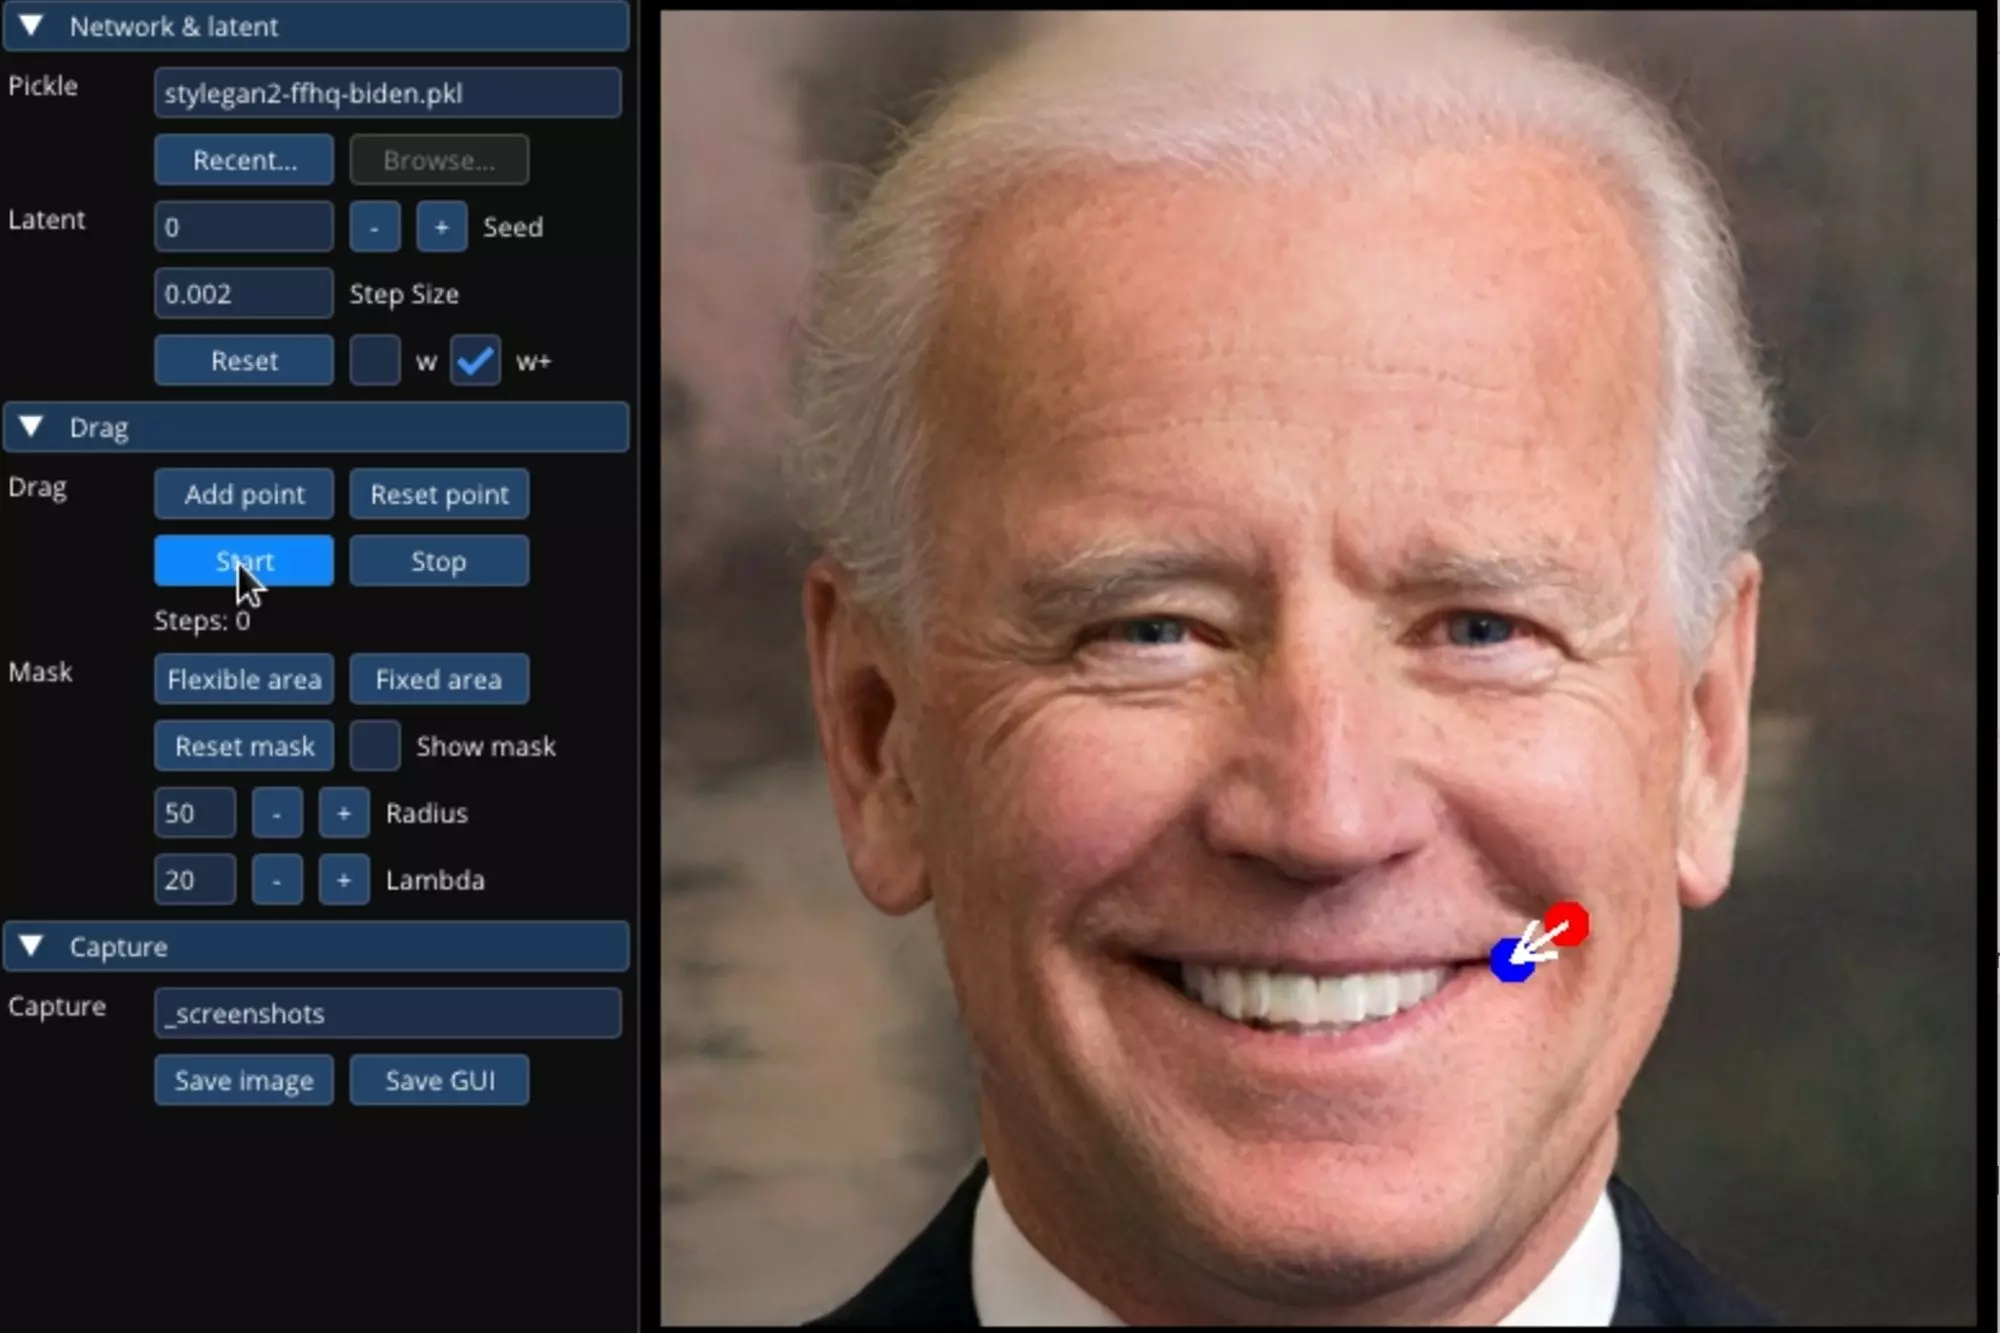 US President Joe Biden's AI Face on DragGAN editor